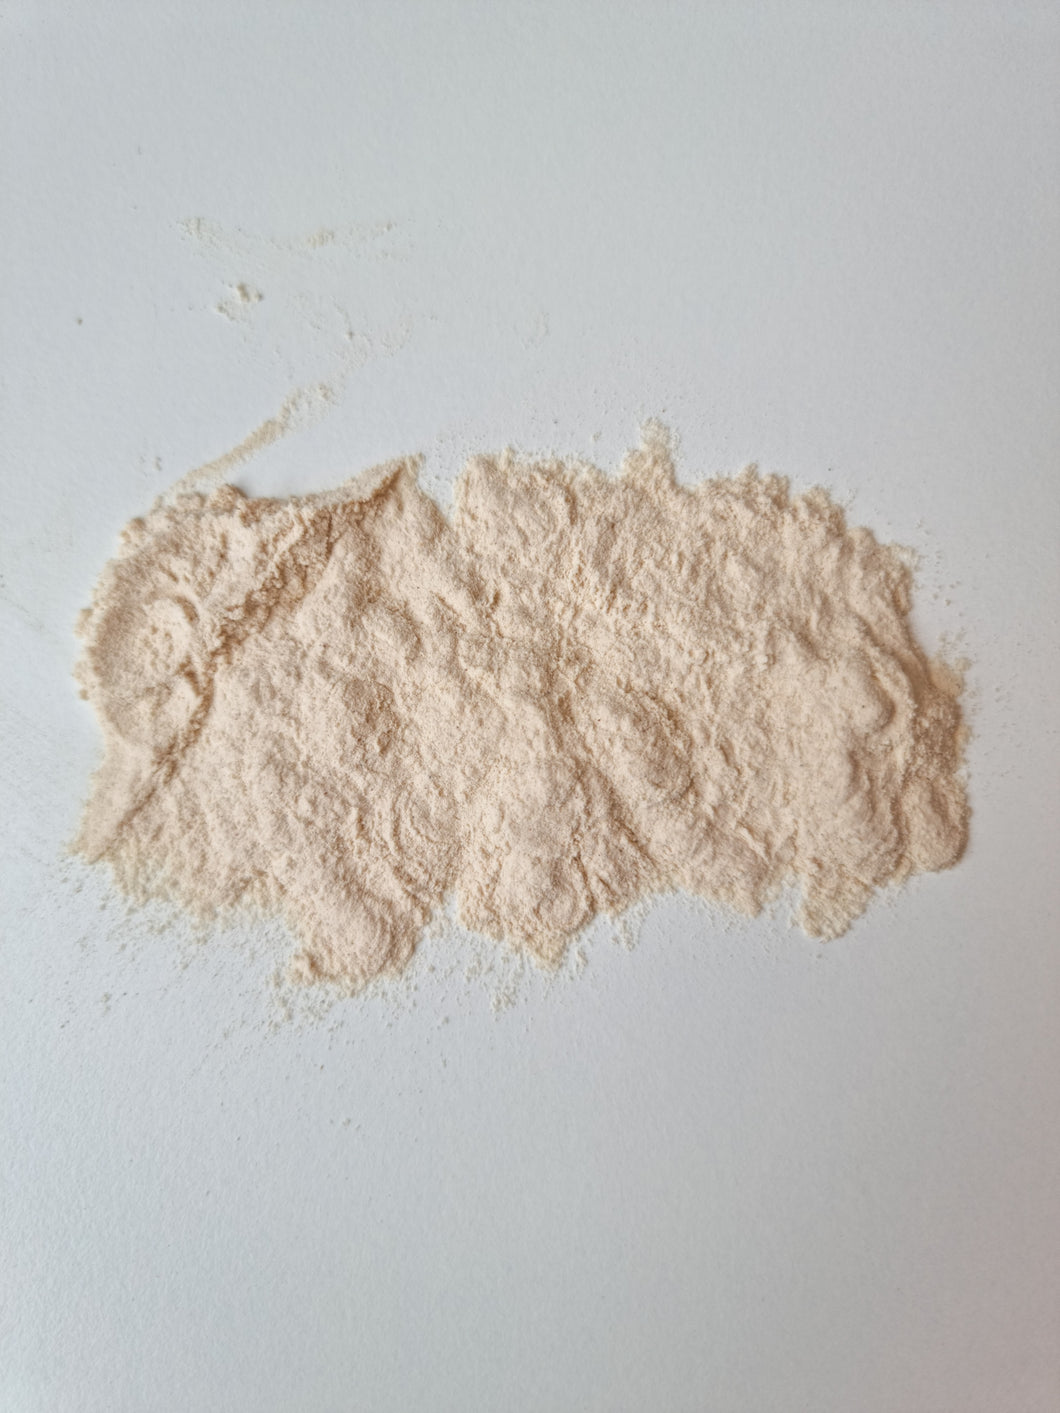 Baobab Powder- Organic